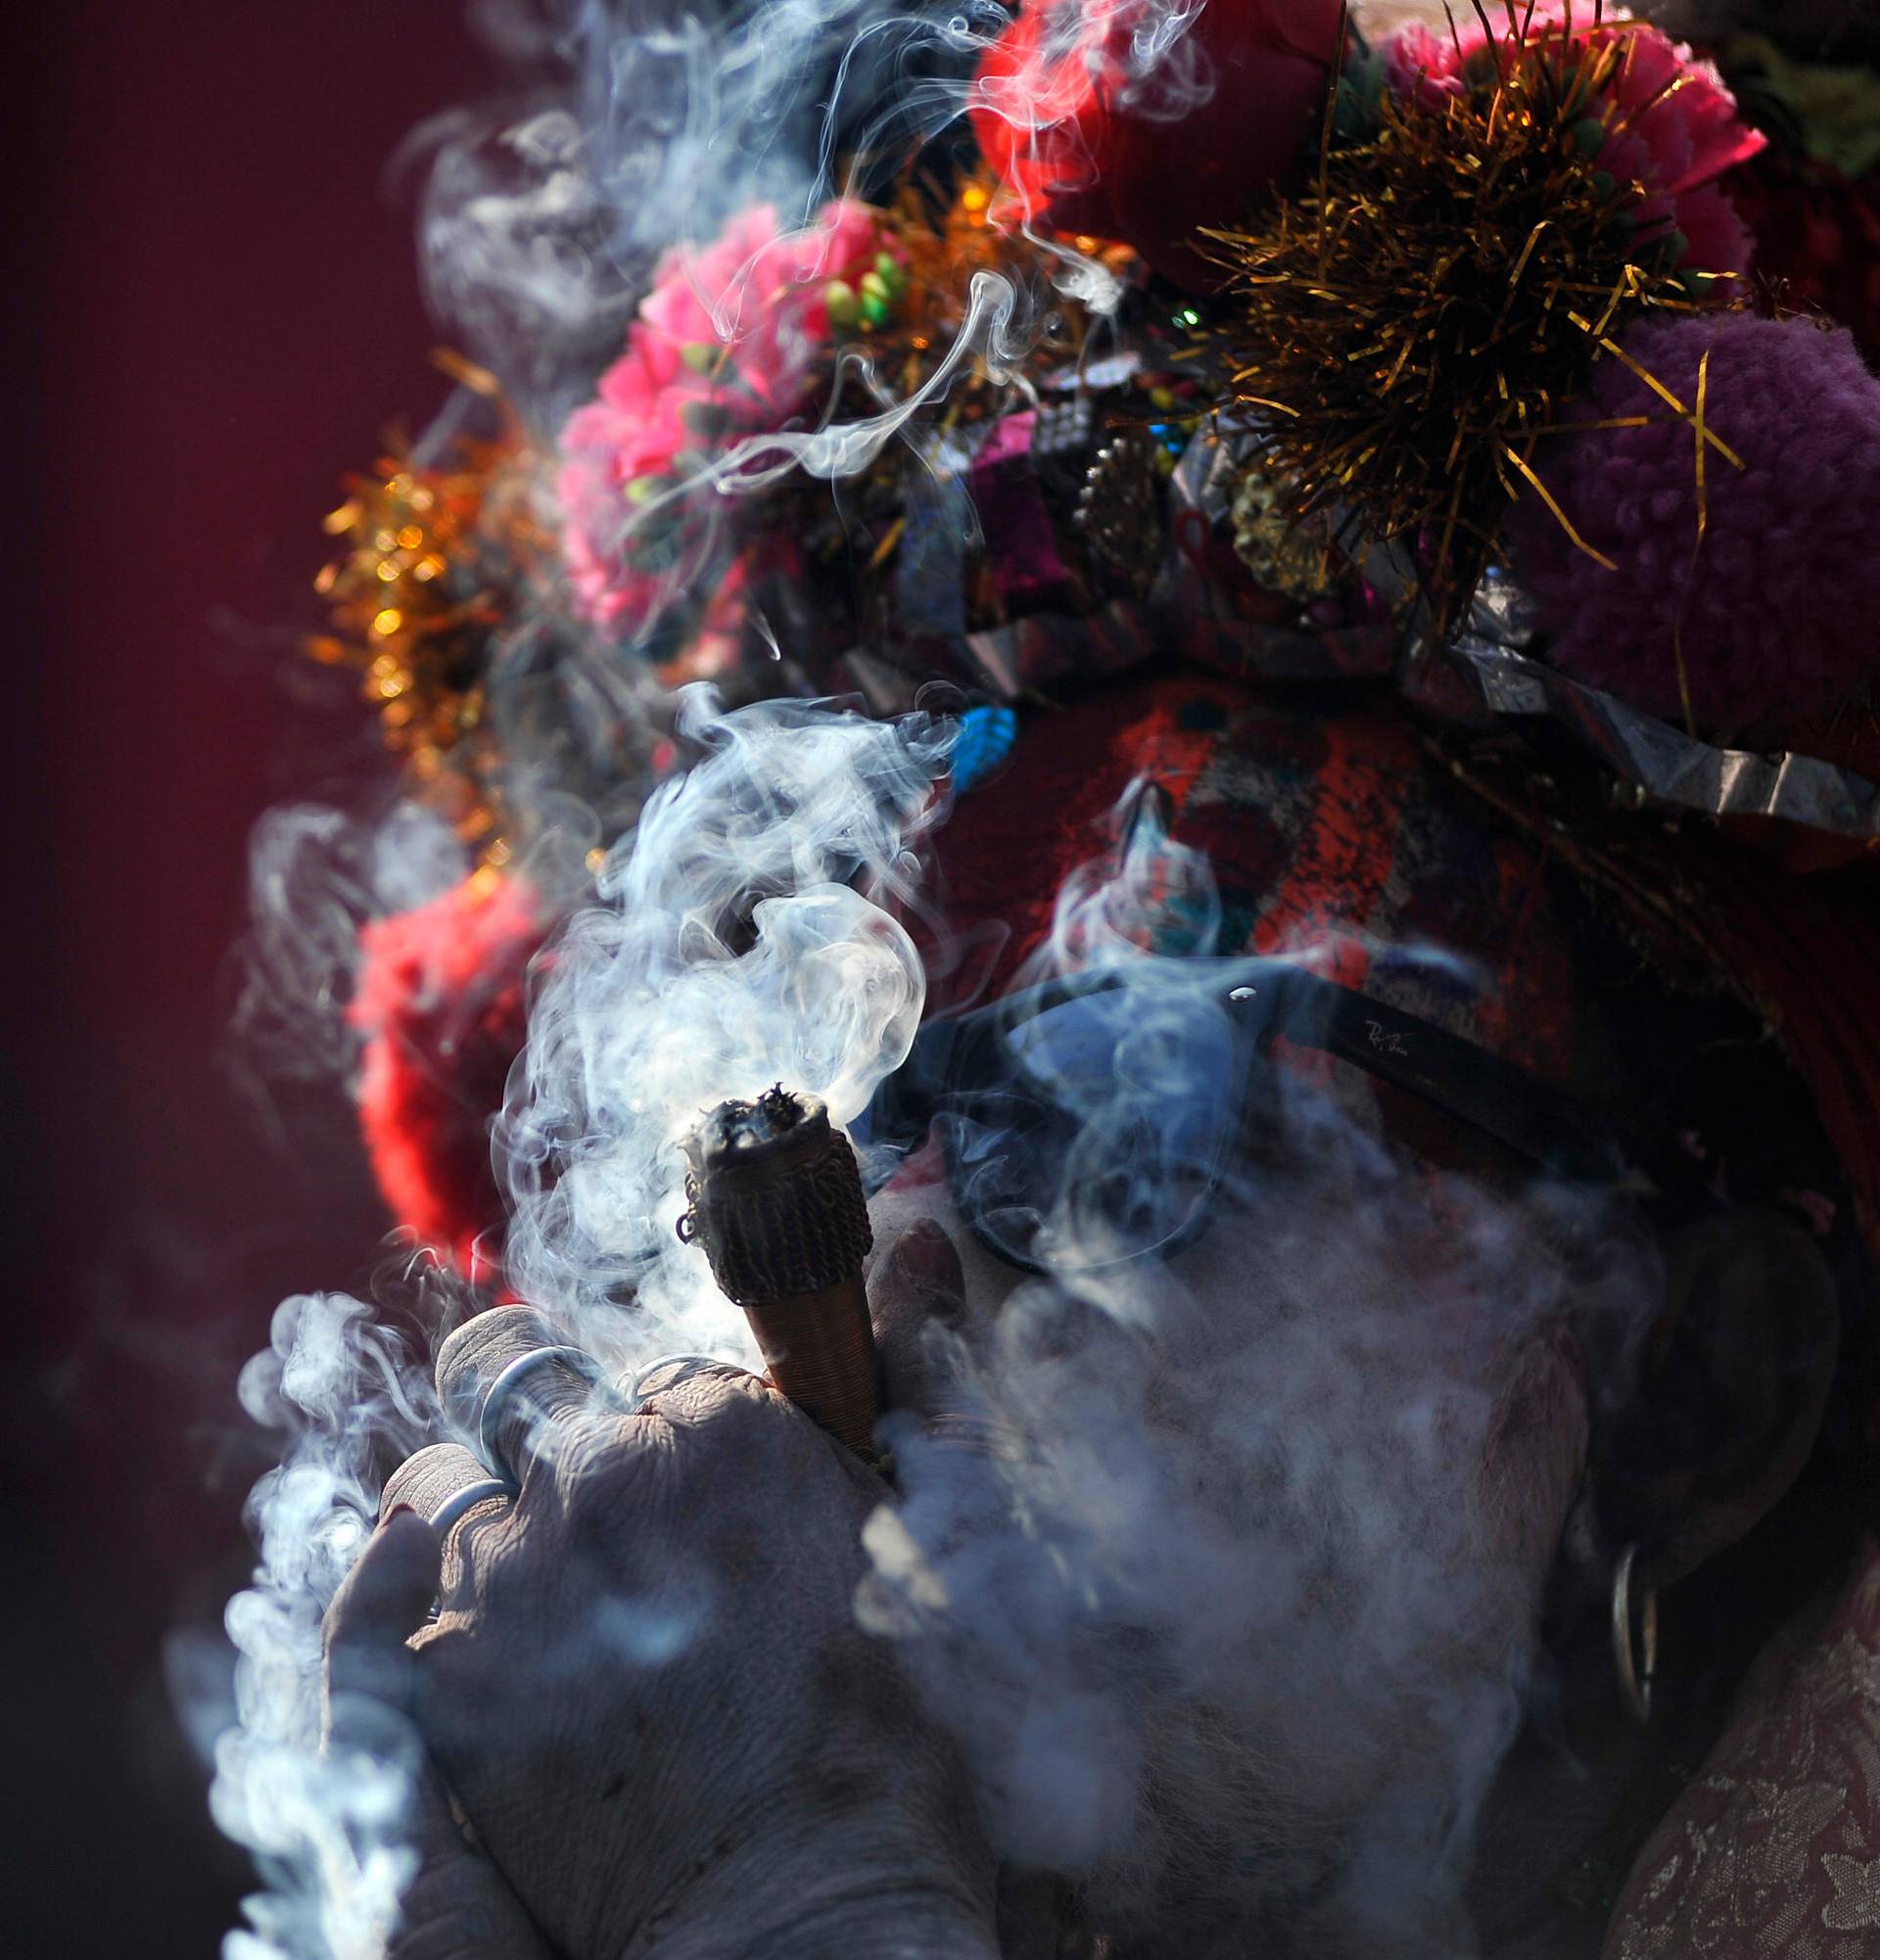 Kathmandu, Nepal. 24th Feb, 2017. A colorful Hindu Sadhu or Holy Man smokes marijuana at the premises of Pashupatinath Temple during the celebration of Maha Shivaratri Festival at Kathmandu, Nepal on Friday, February 24, 2017. Thousands of Hindu Sadhu or 